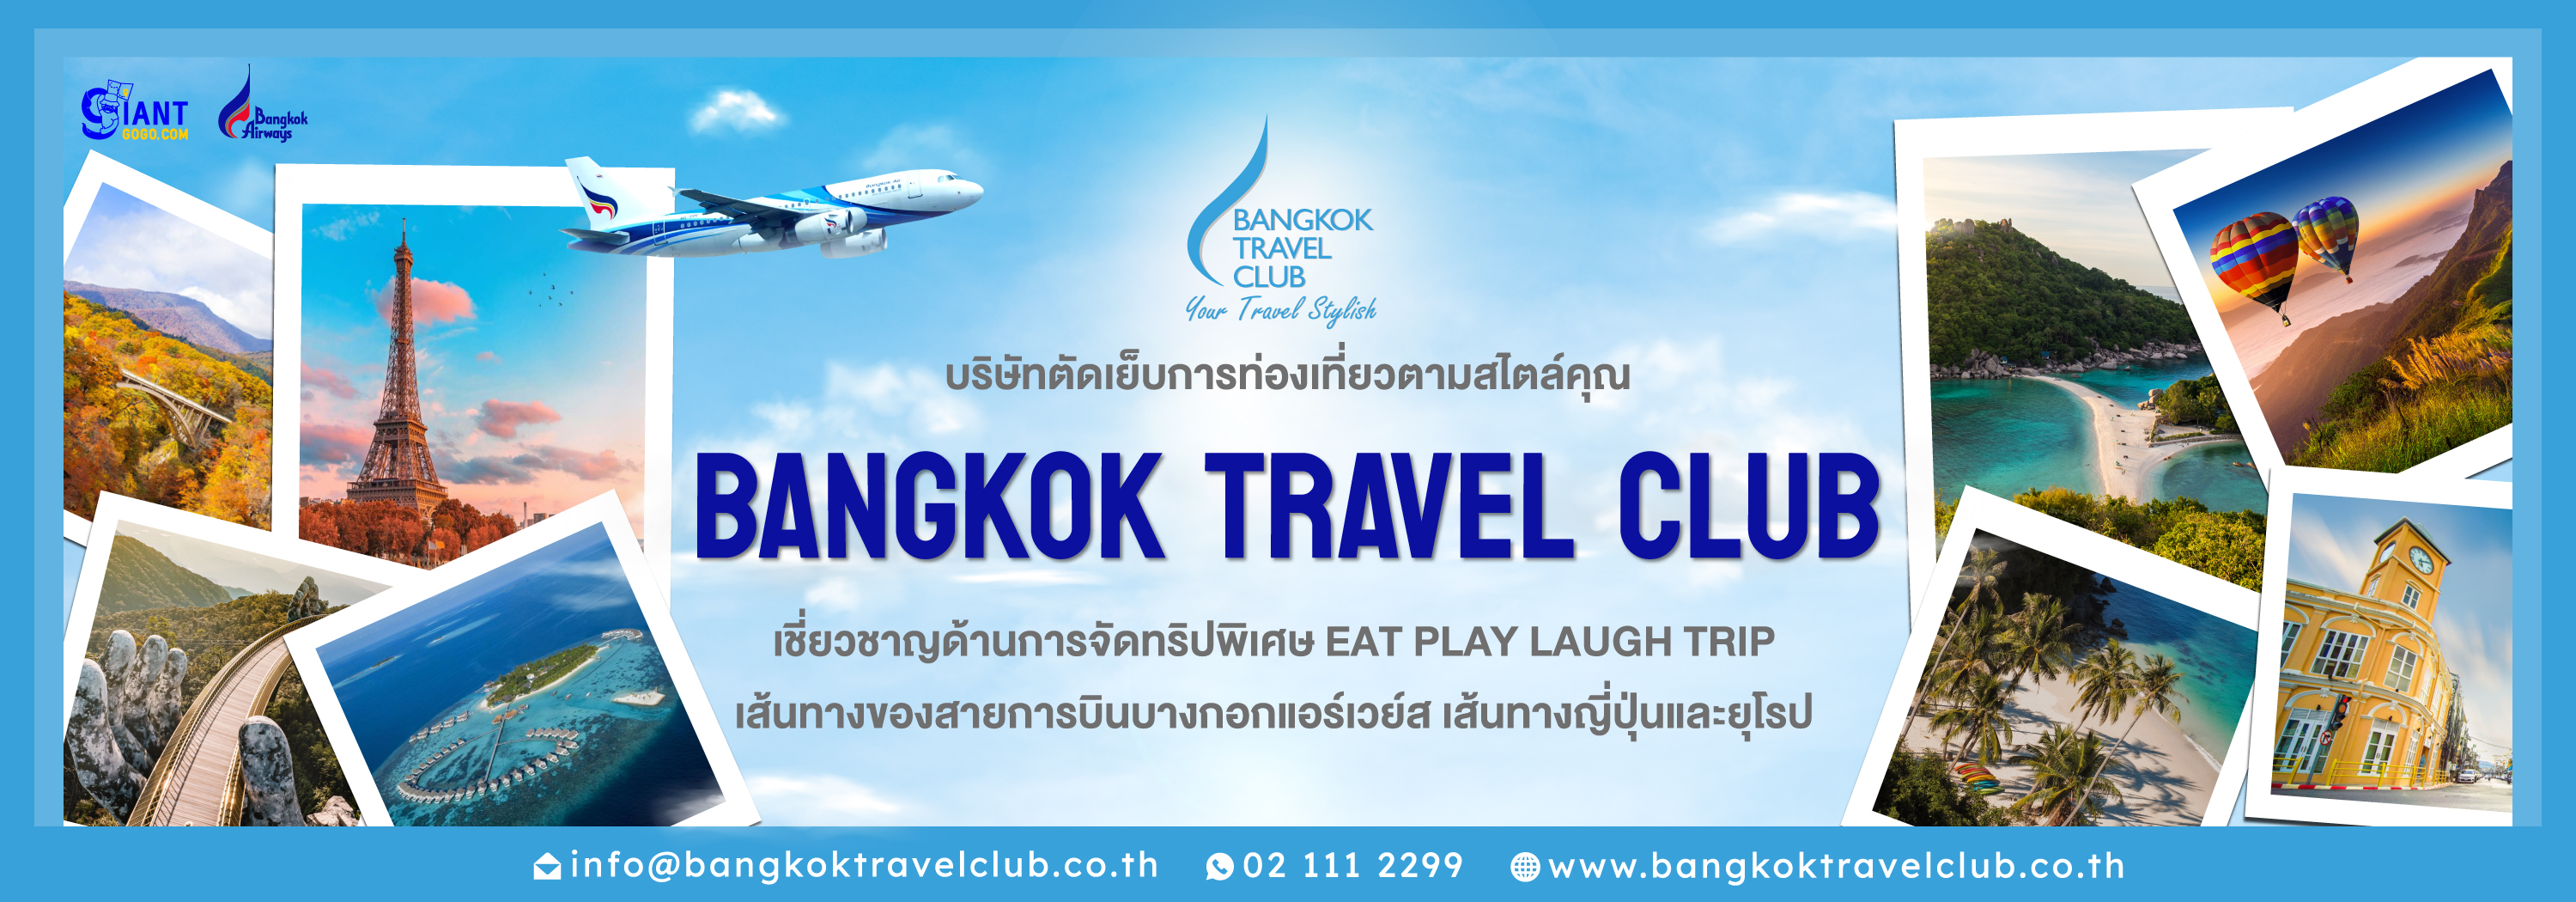 Bangkok Travel Club